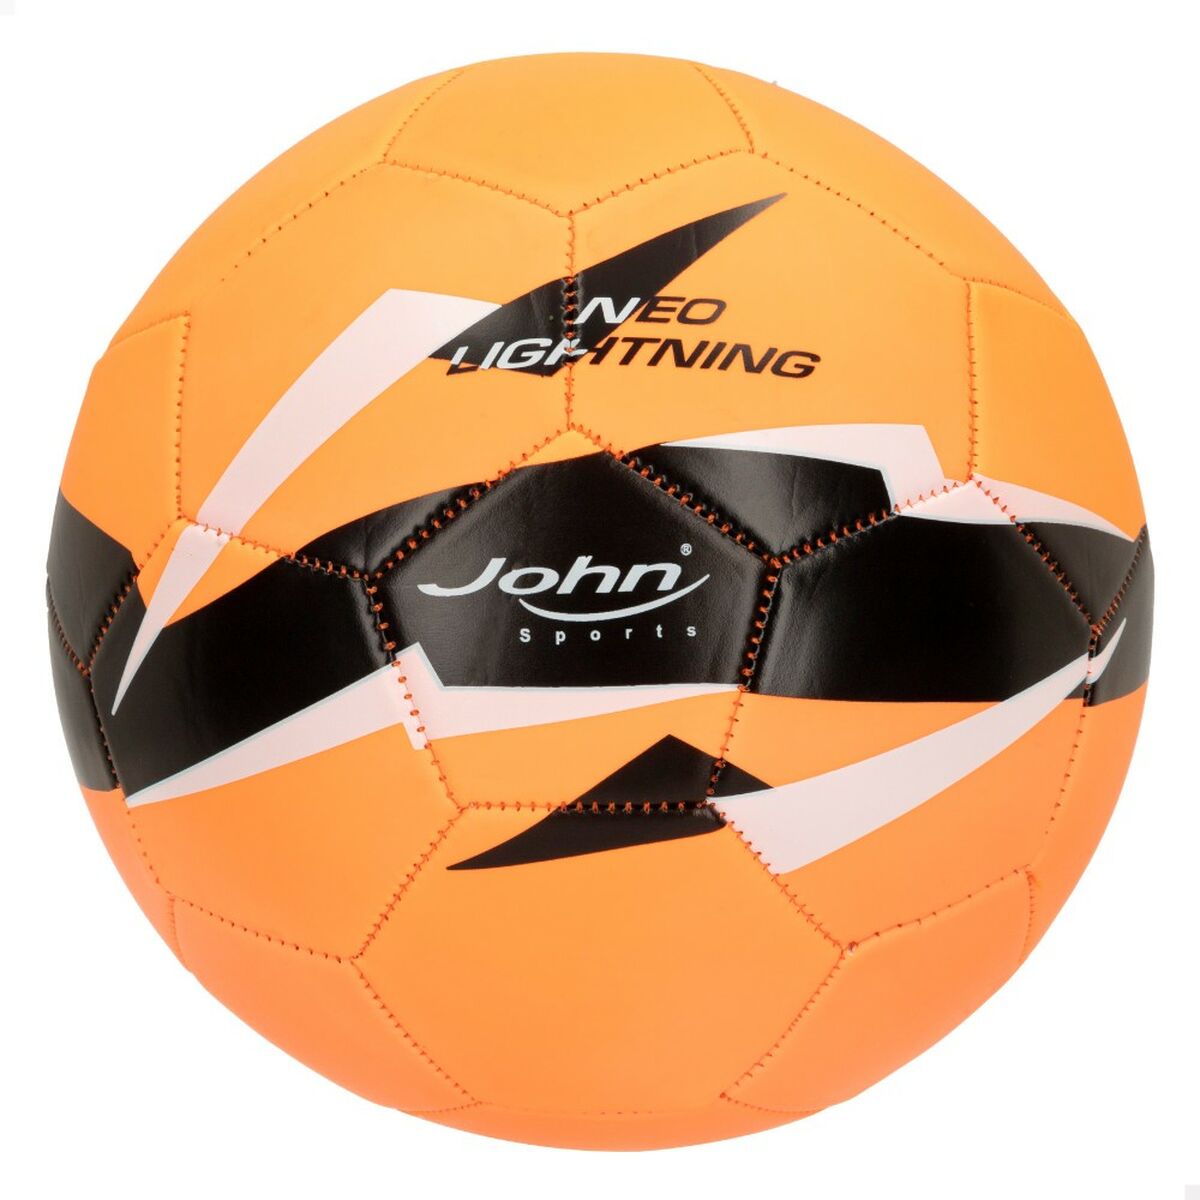 Fussball John Sports World Star 5 Ø 22 cm Kunstleder (12 Stück)